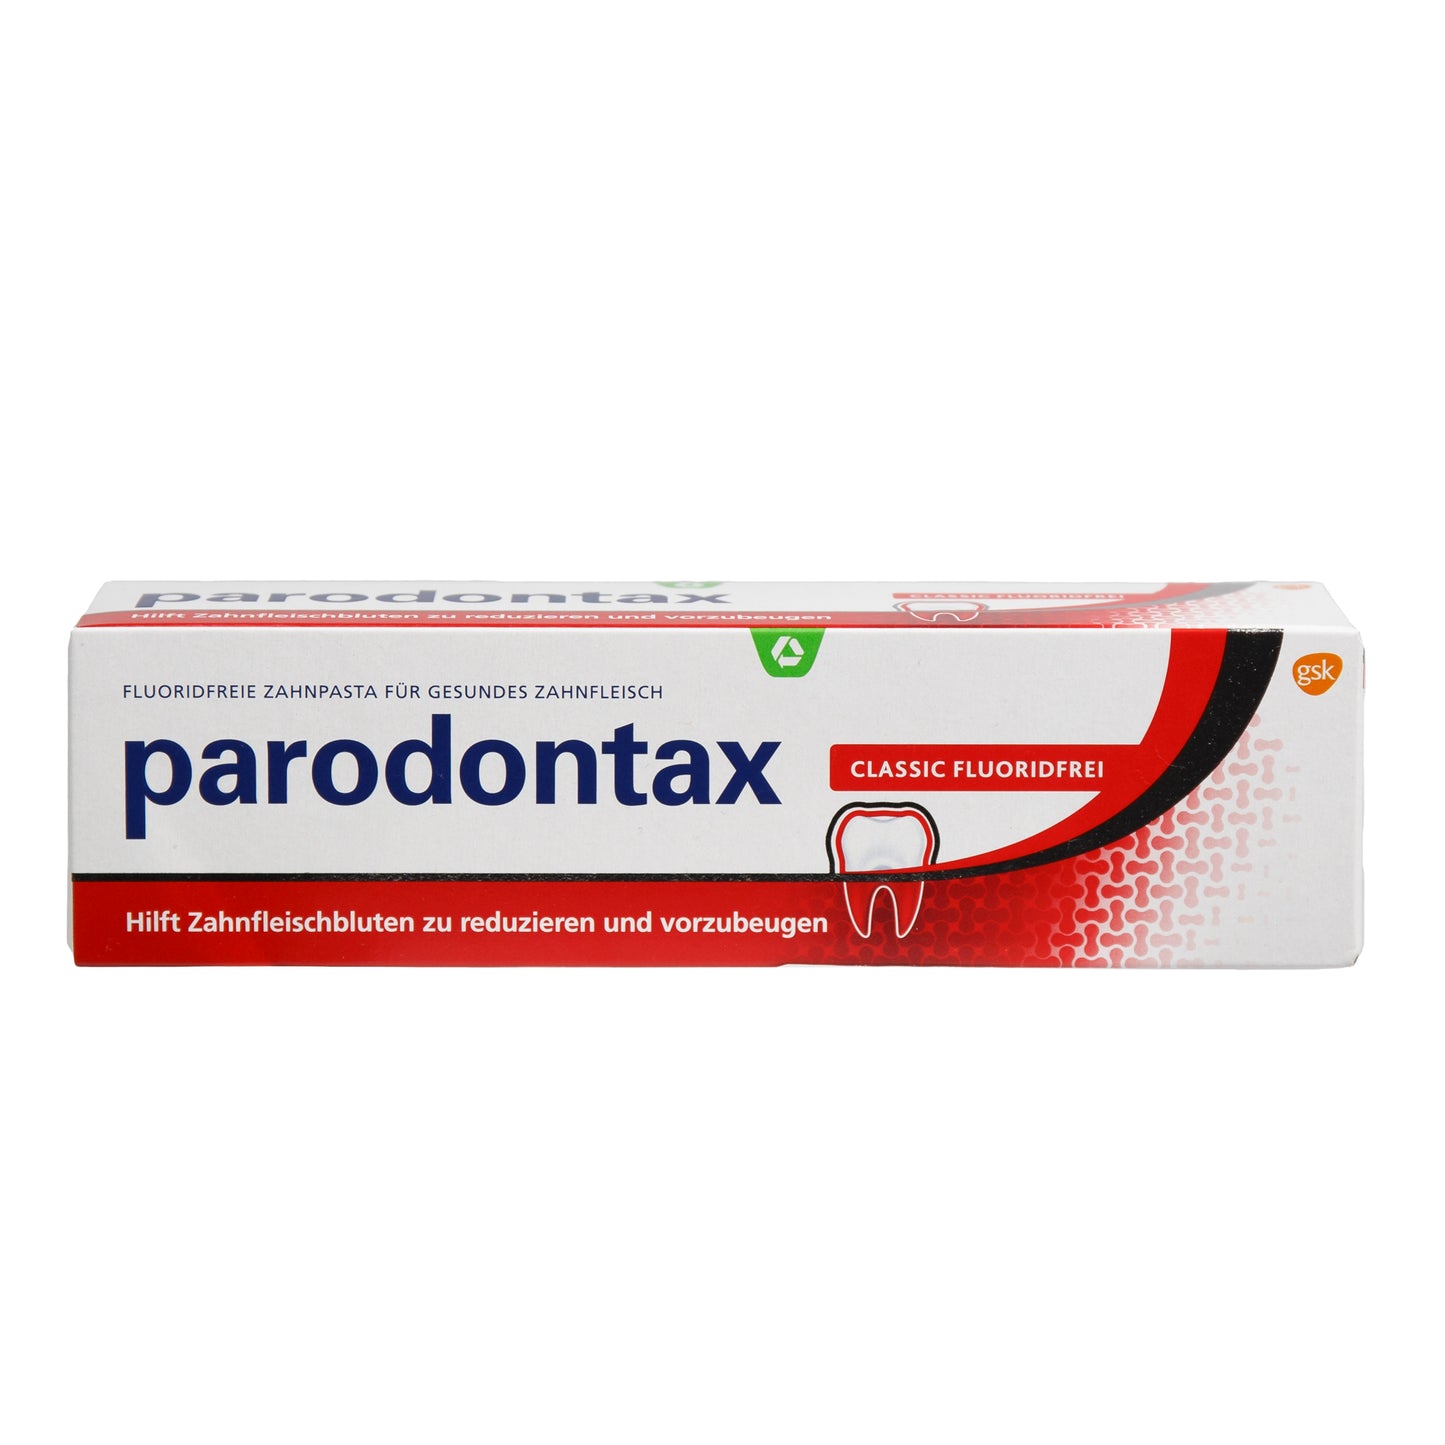 Primary Image of Parodontax Herbal Toothpaste